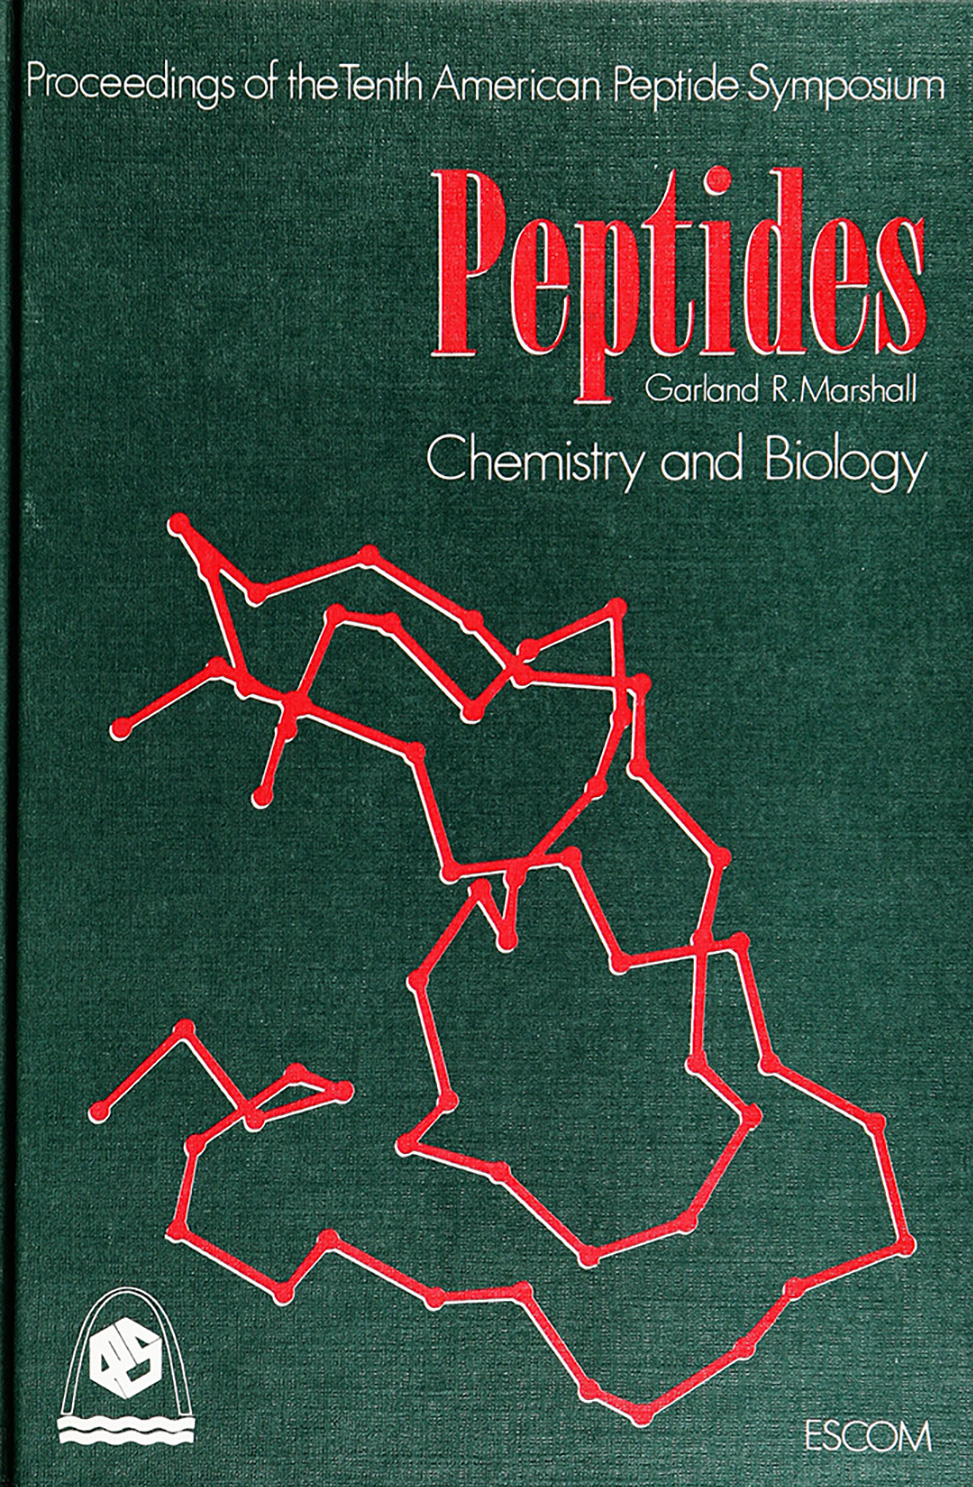 1987 Proceedings Cover